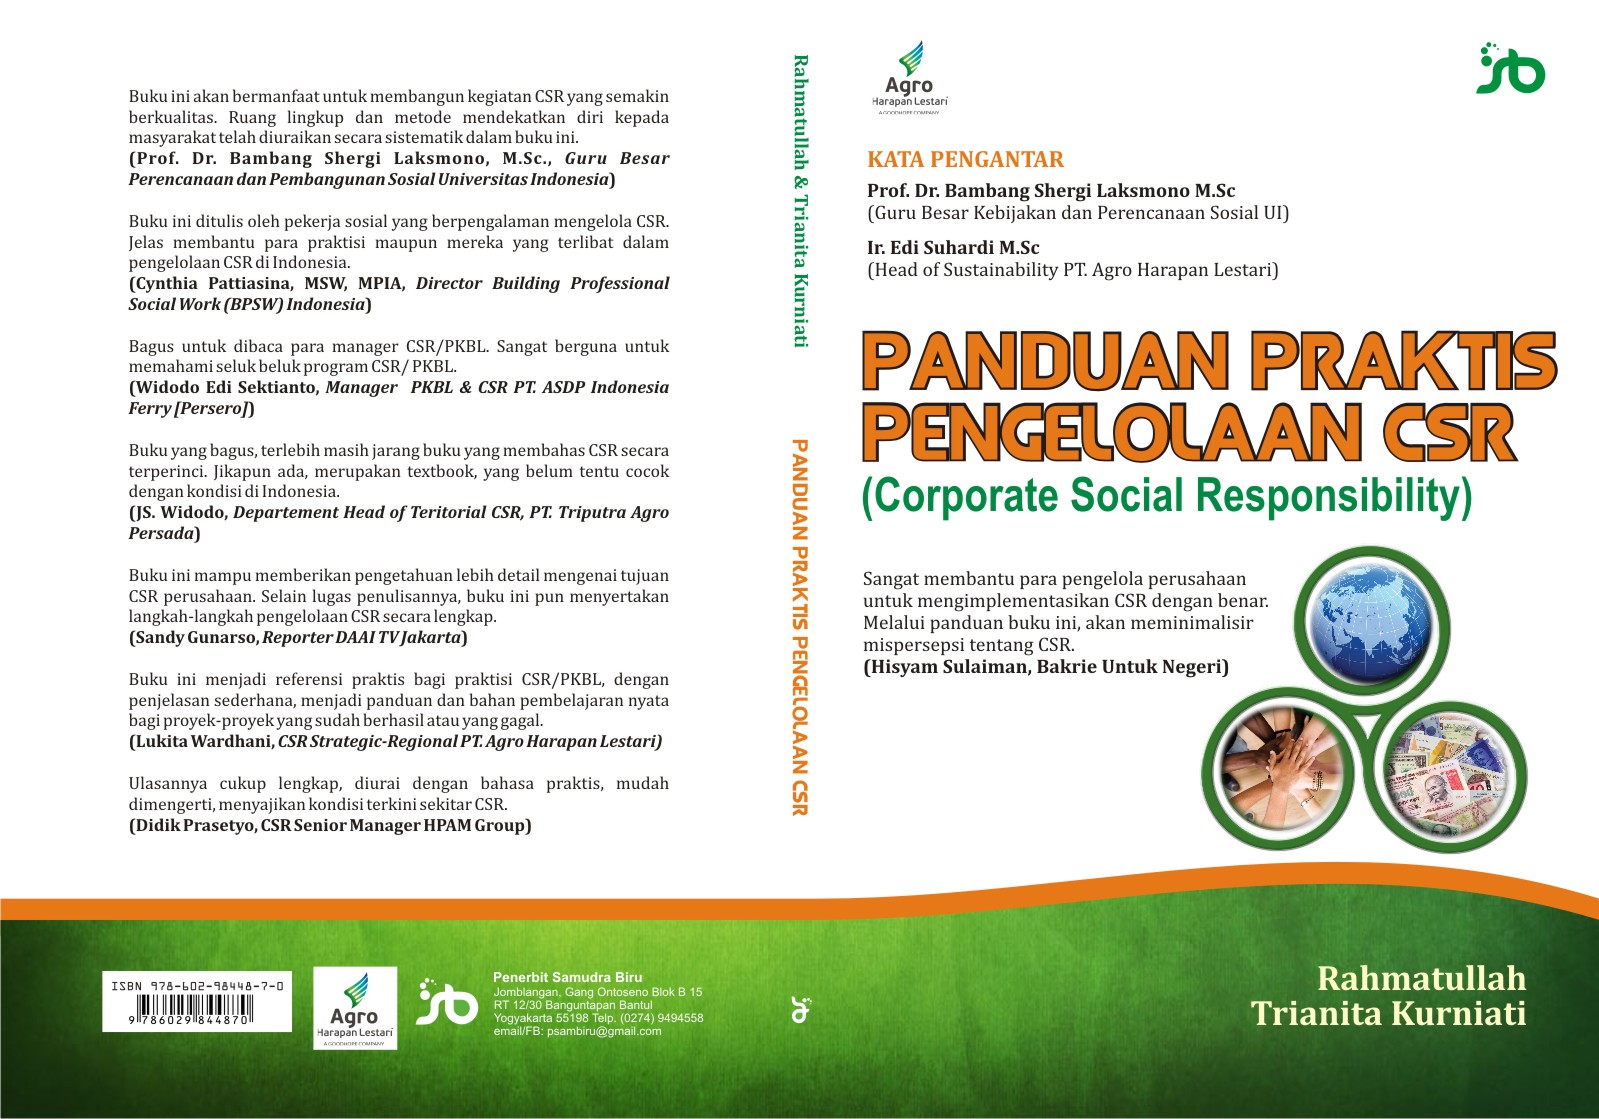 Buku : Panduan Praktis Pengelolaan CSR  Rahmatullah